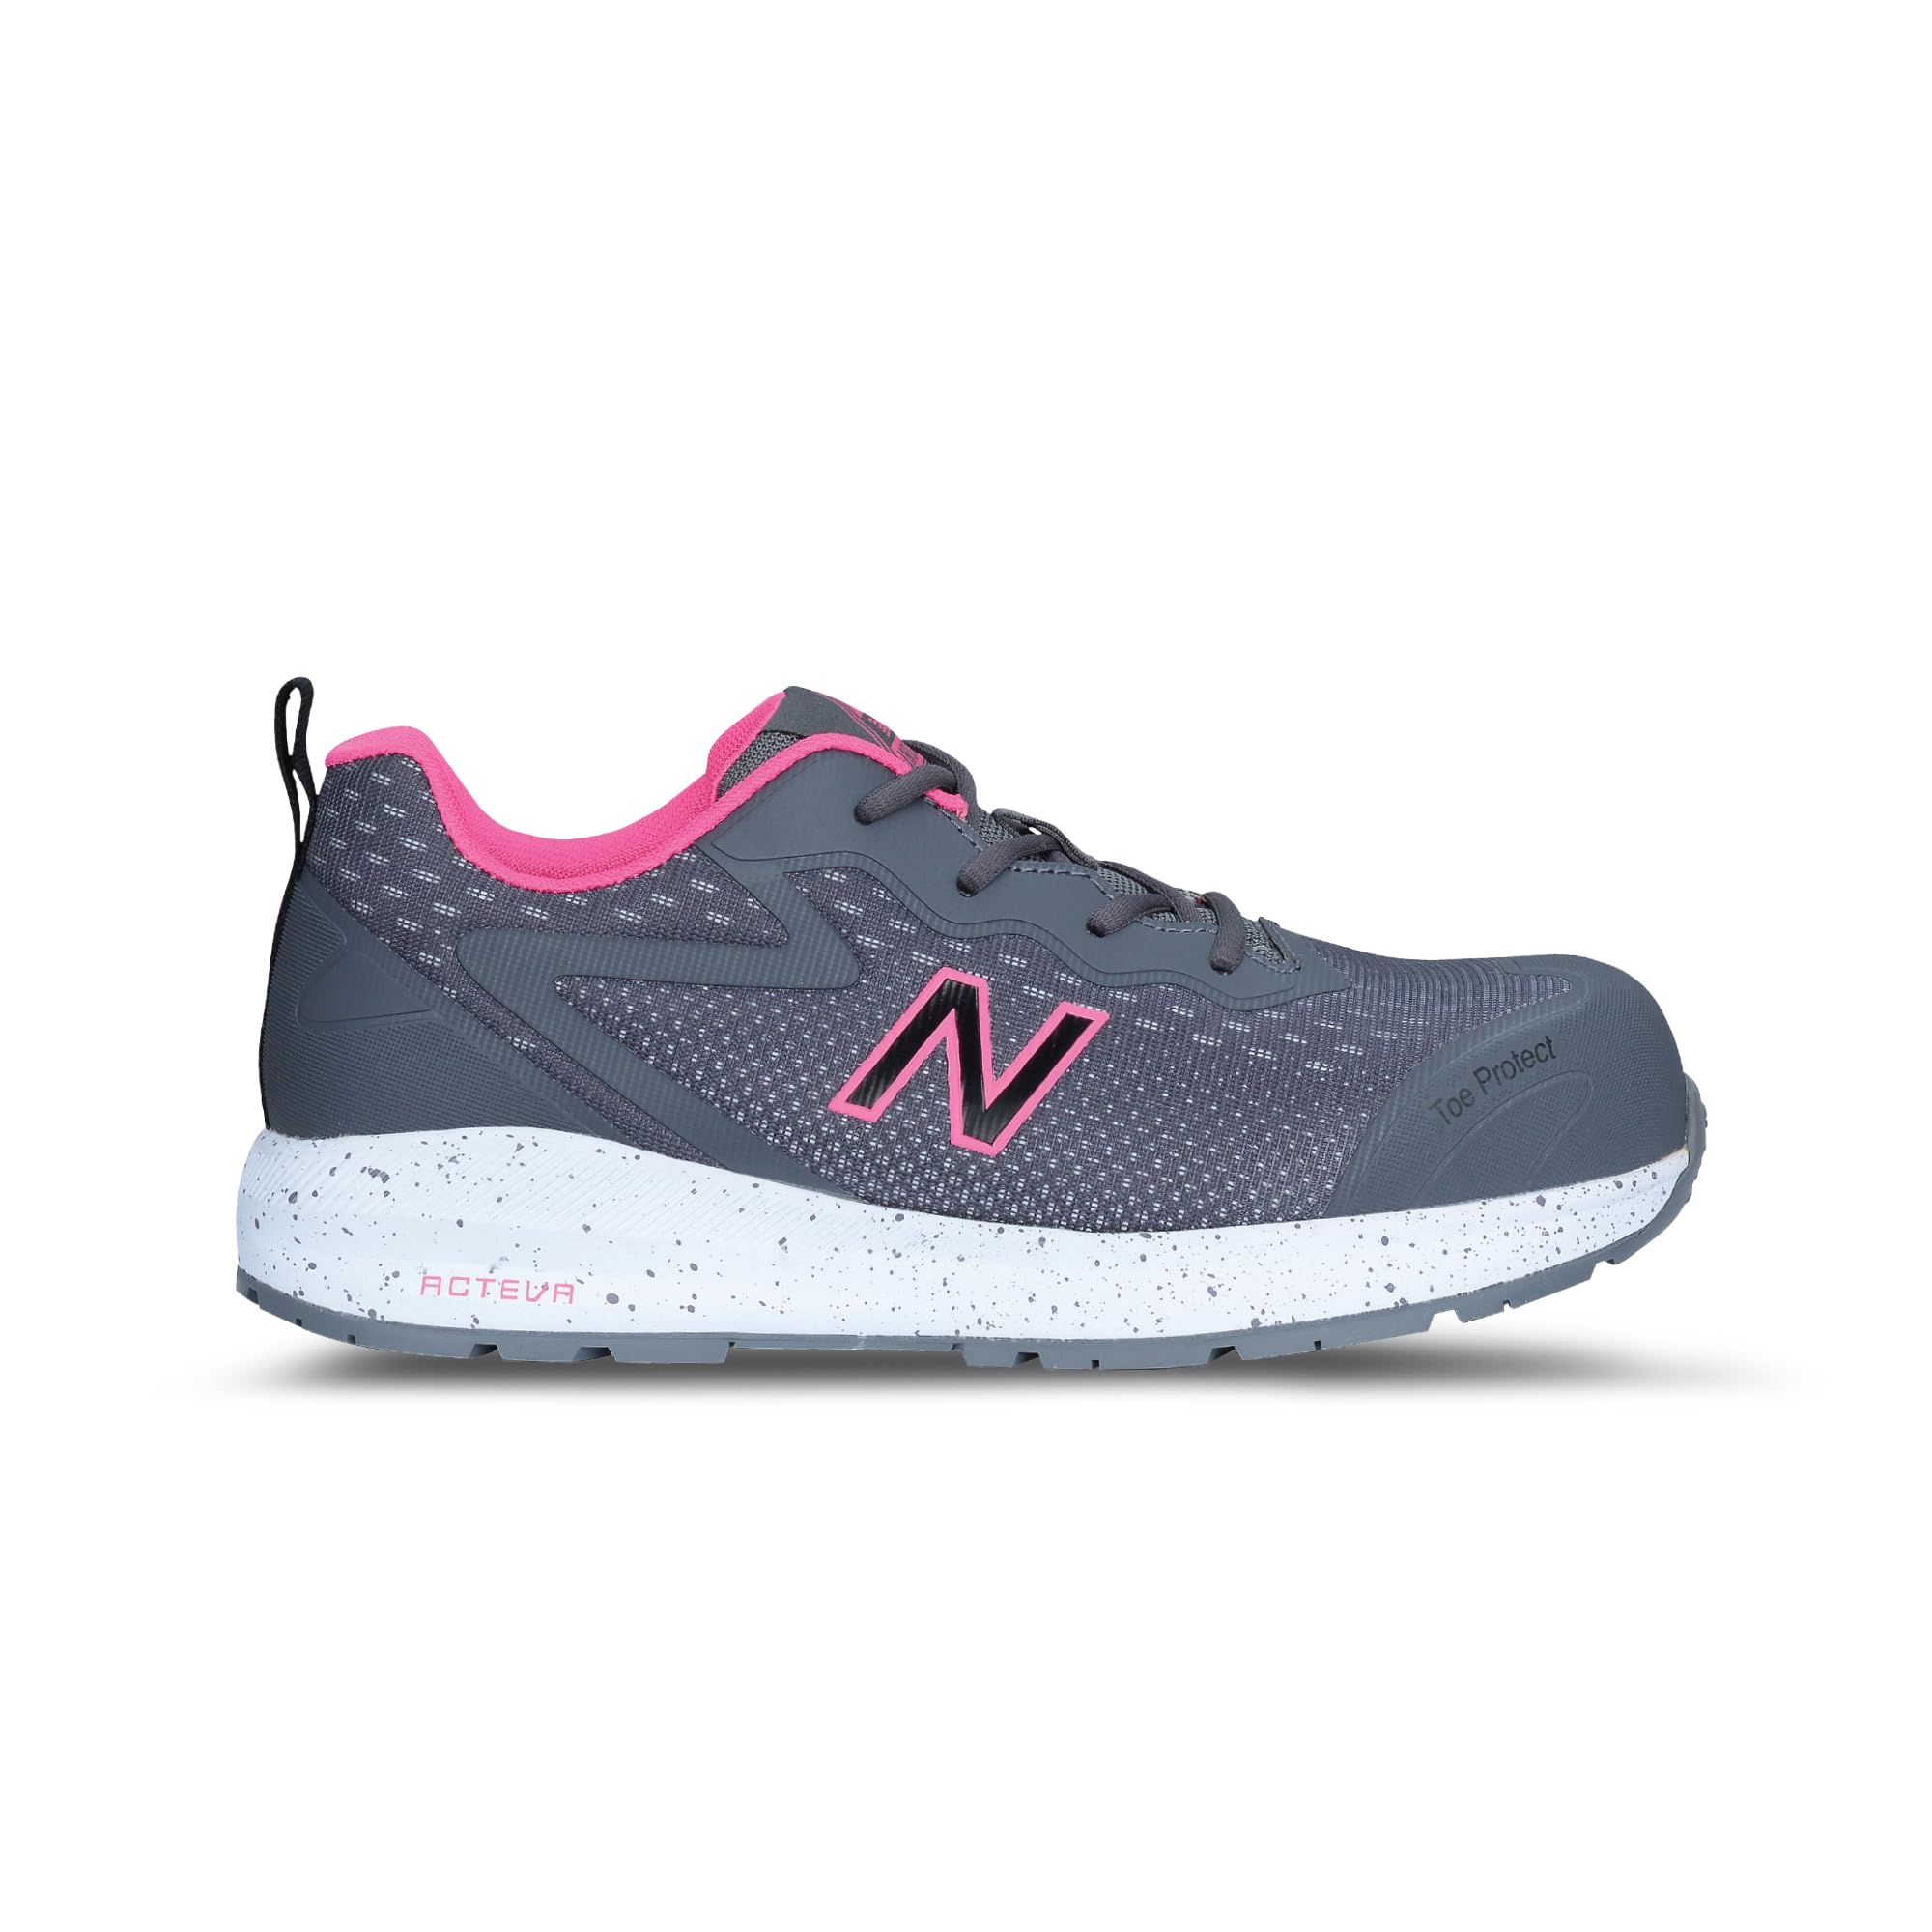 New Balance Women's Composite Toe Logic Industrial Boot, Grey/Pink, 8.5 Wide